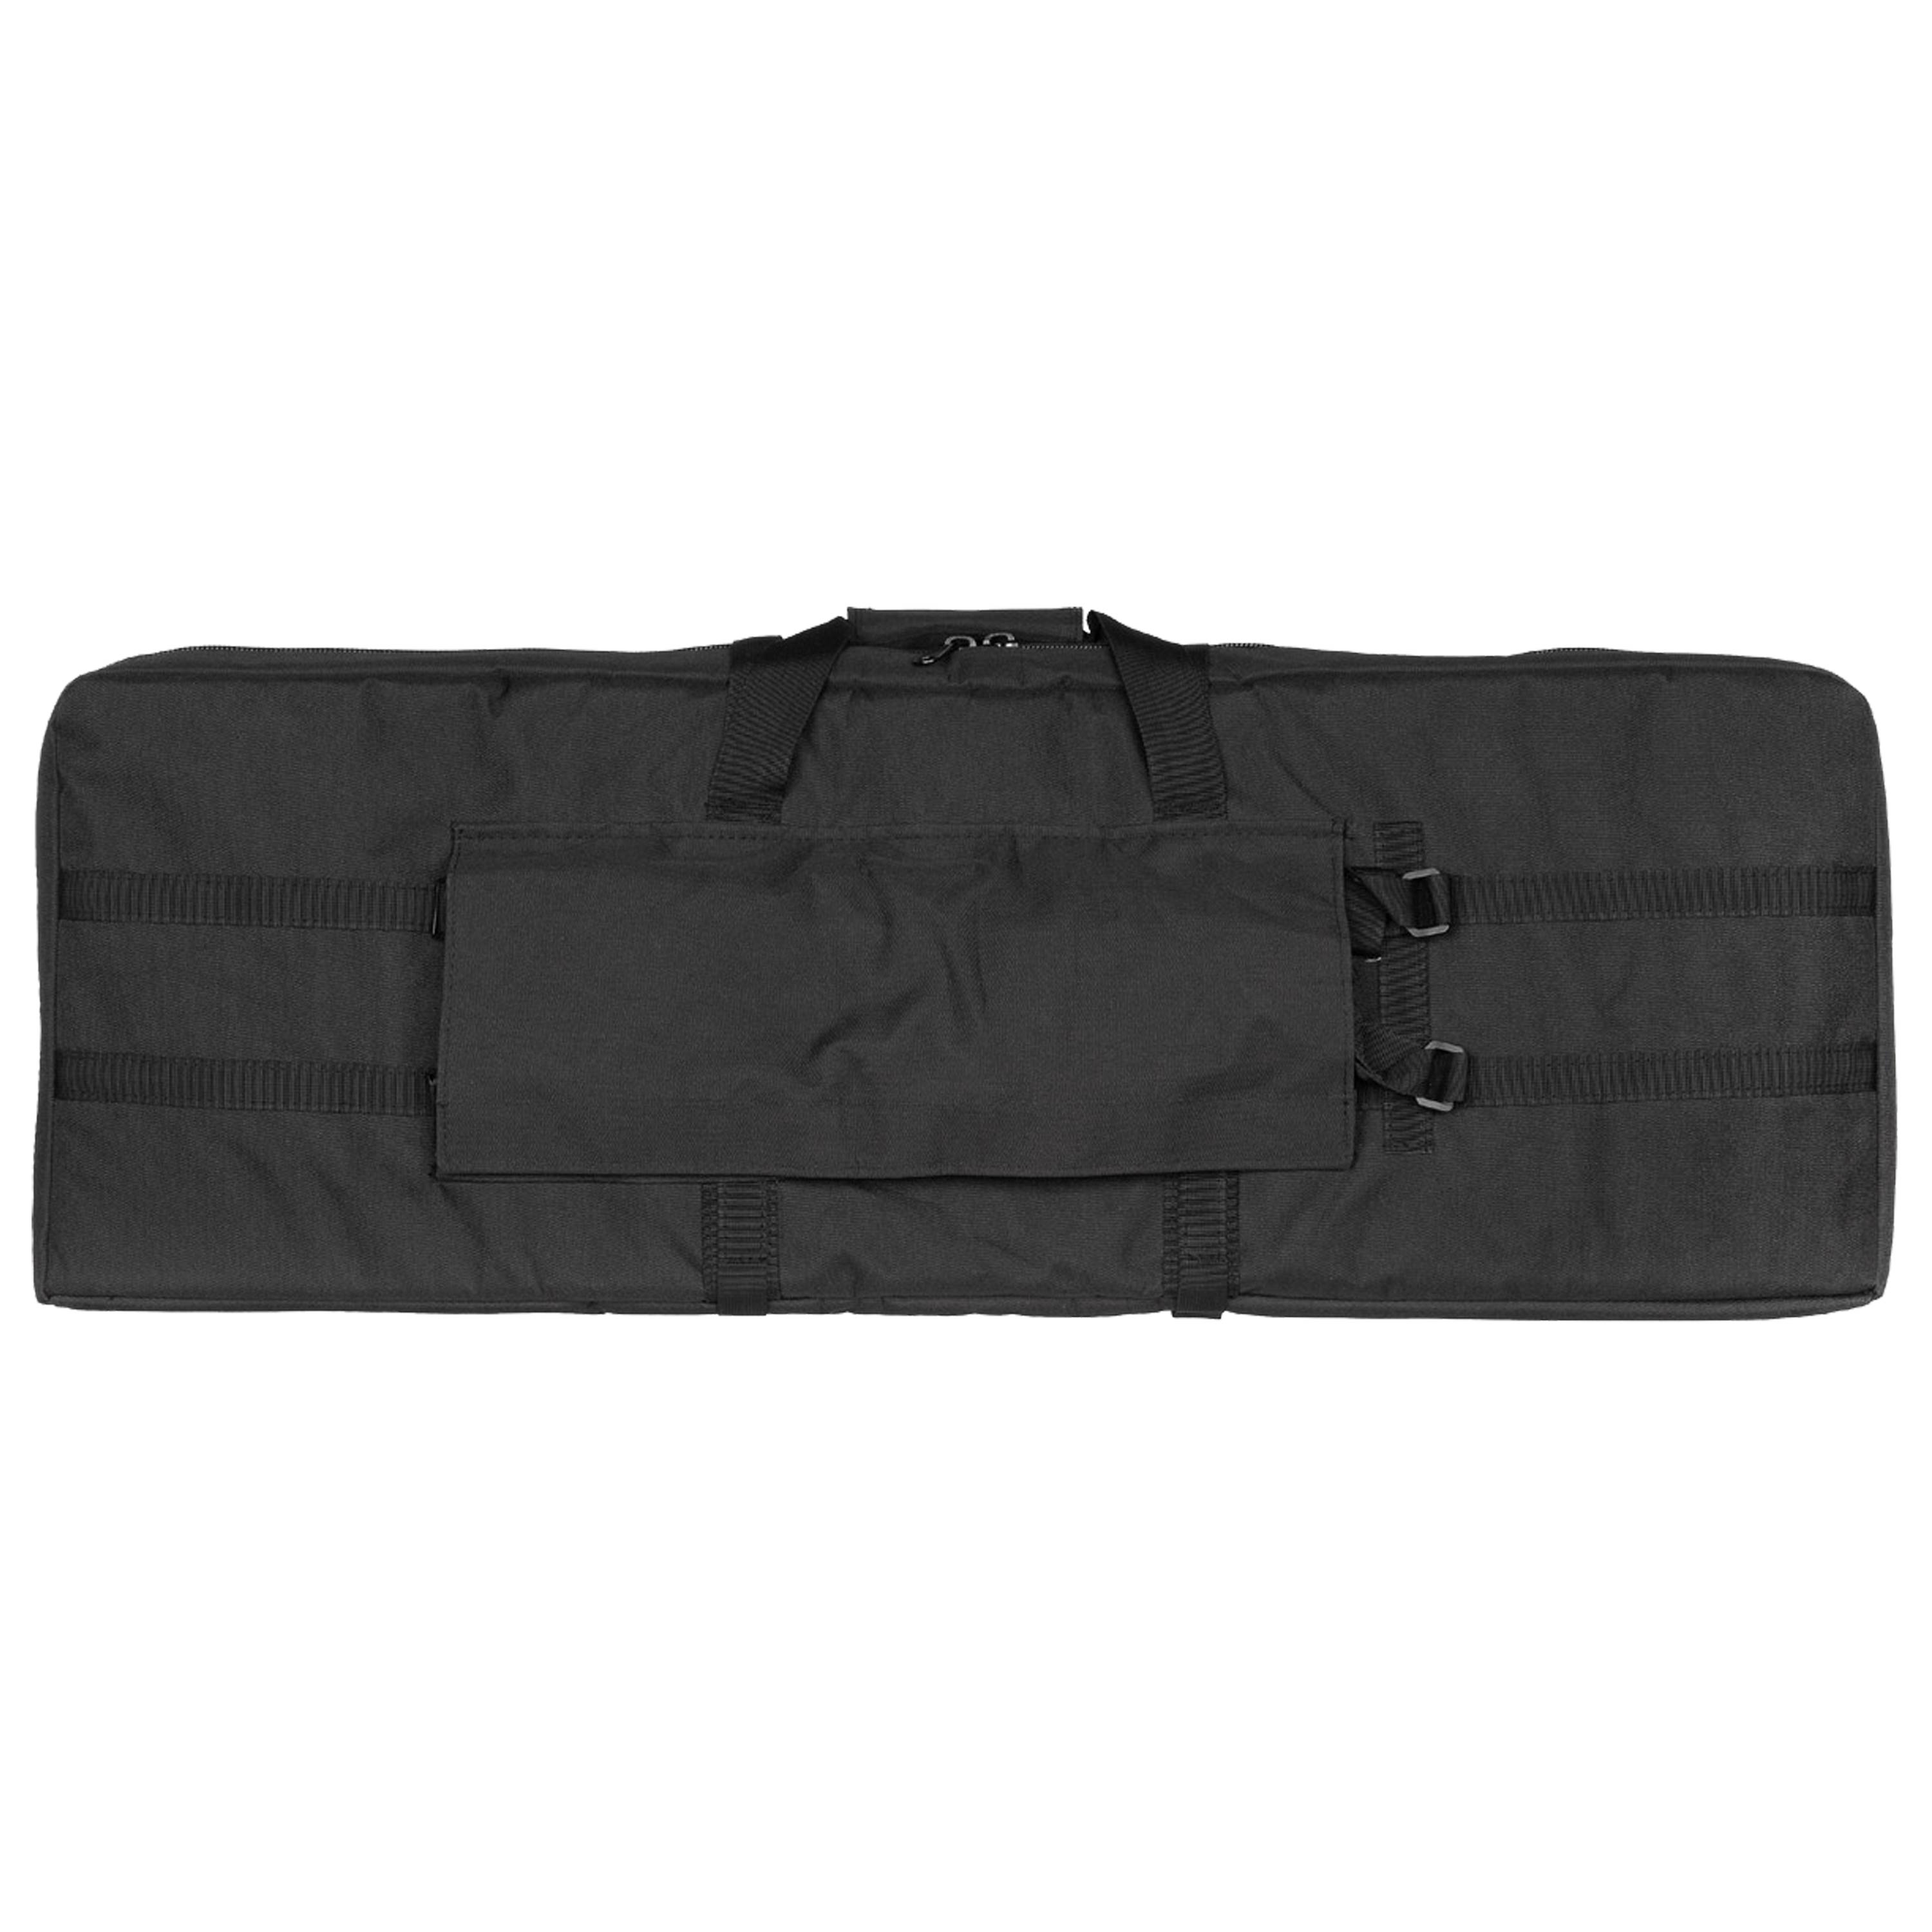 MFH Padded Double Rifle Bag black | MFH Padded Double Rifle Bag black ...